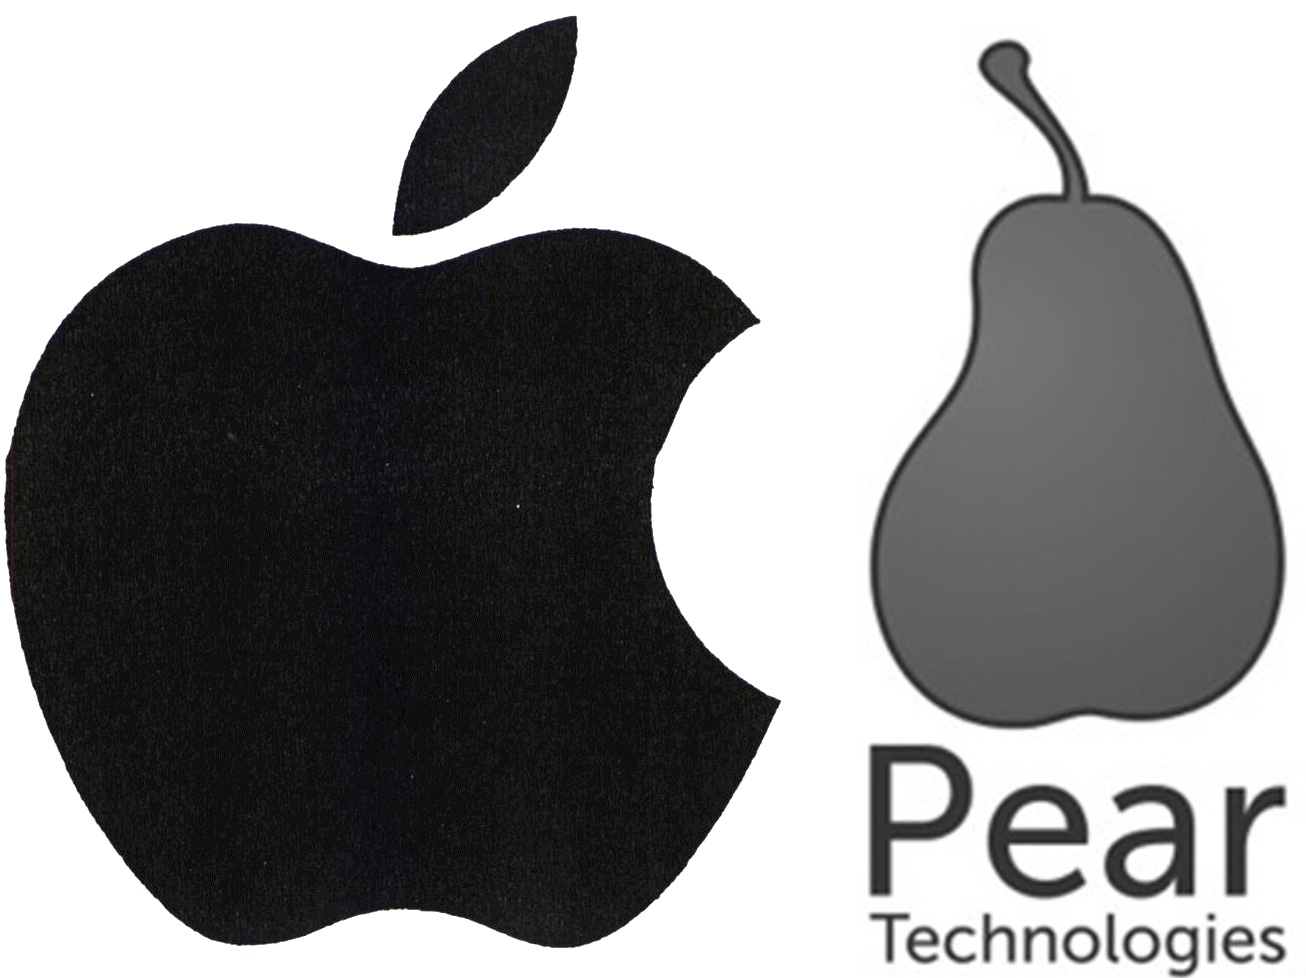 Apple gewinnt Rechtsstreit mit Pear Technologies